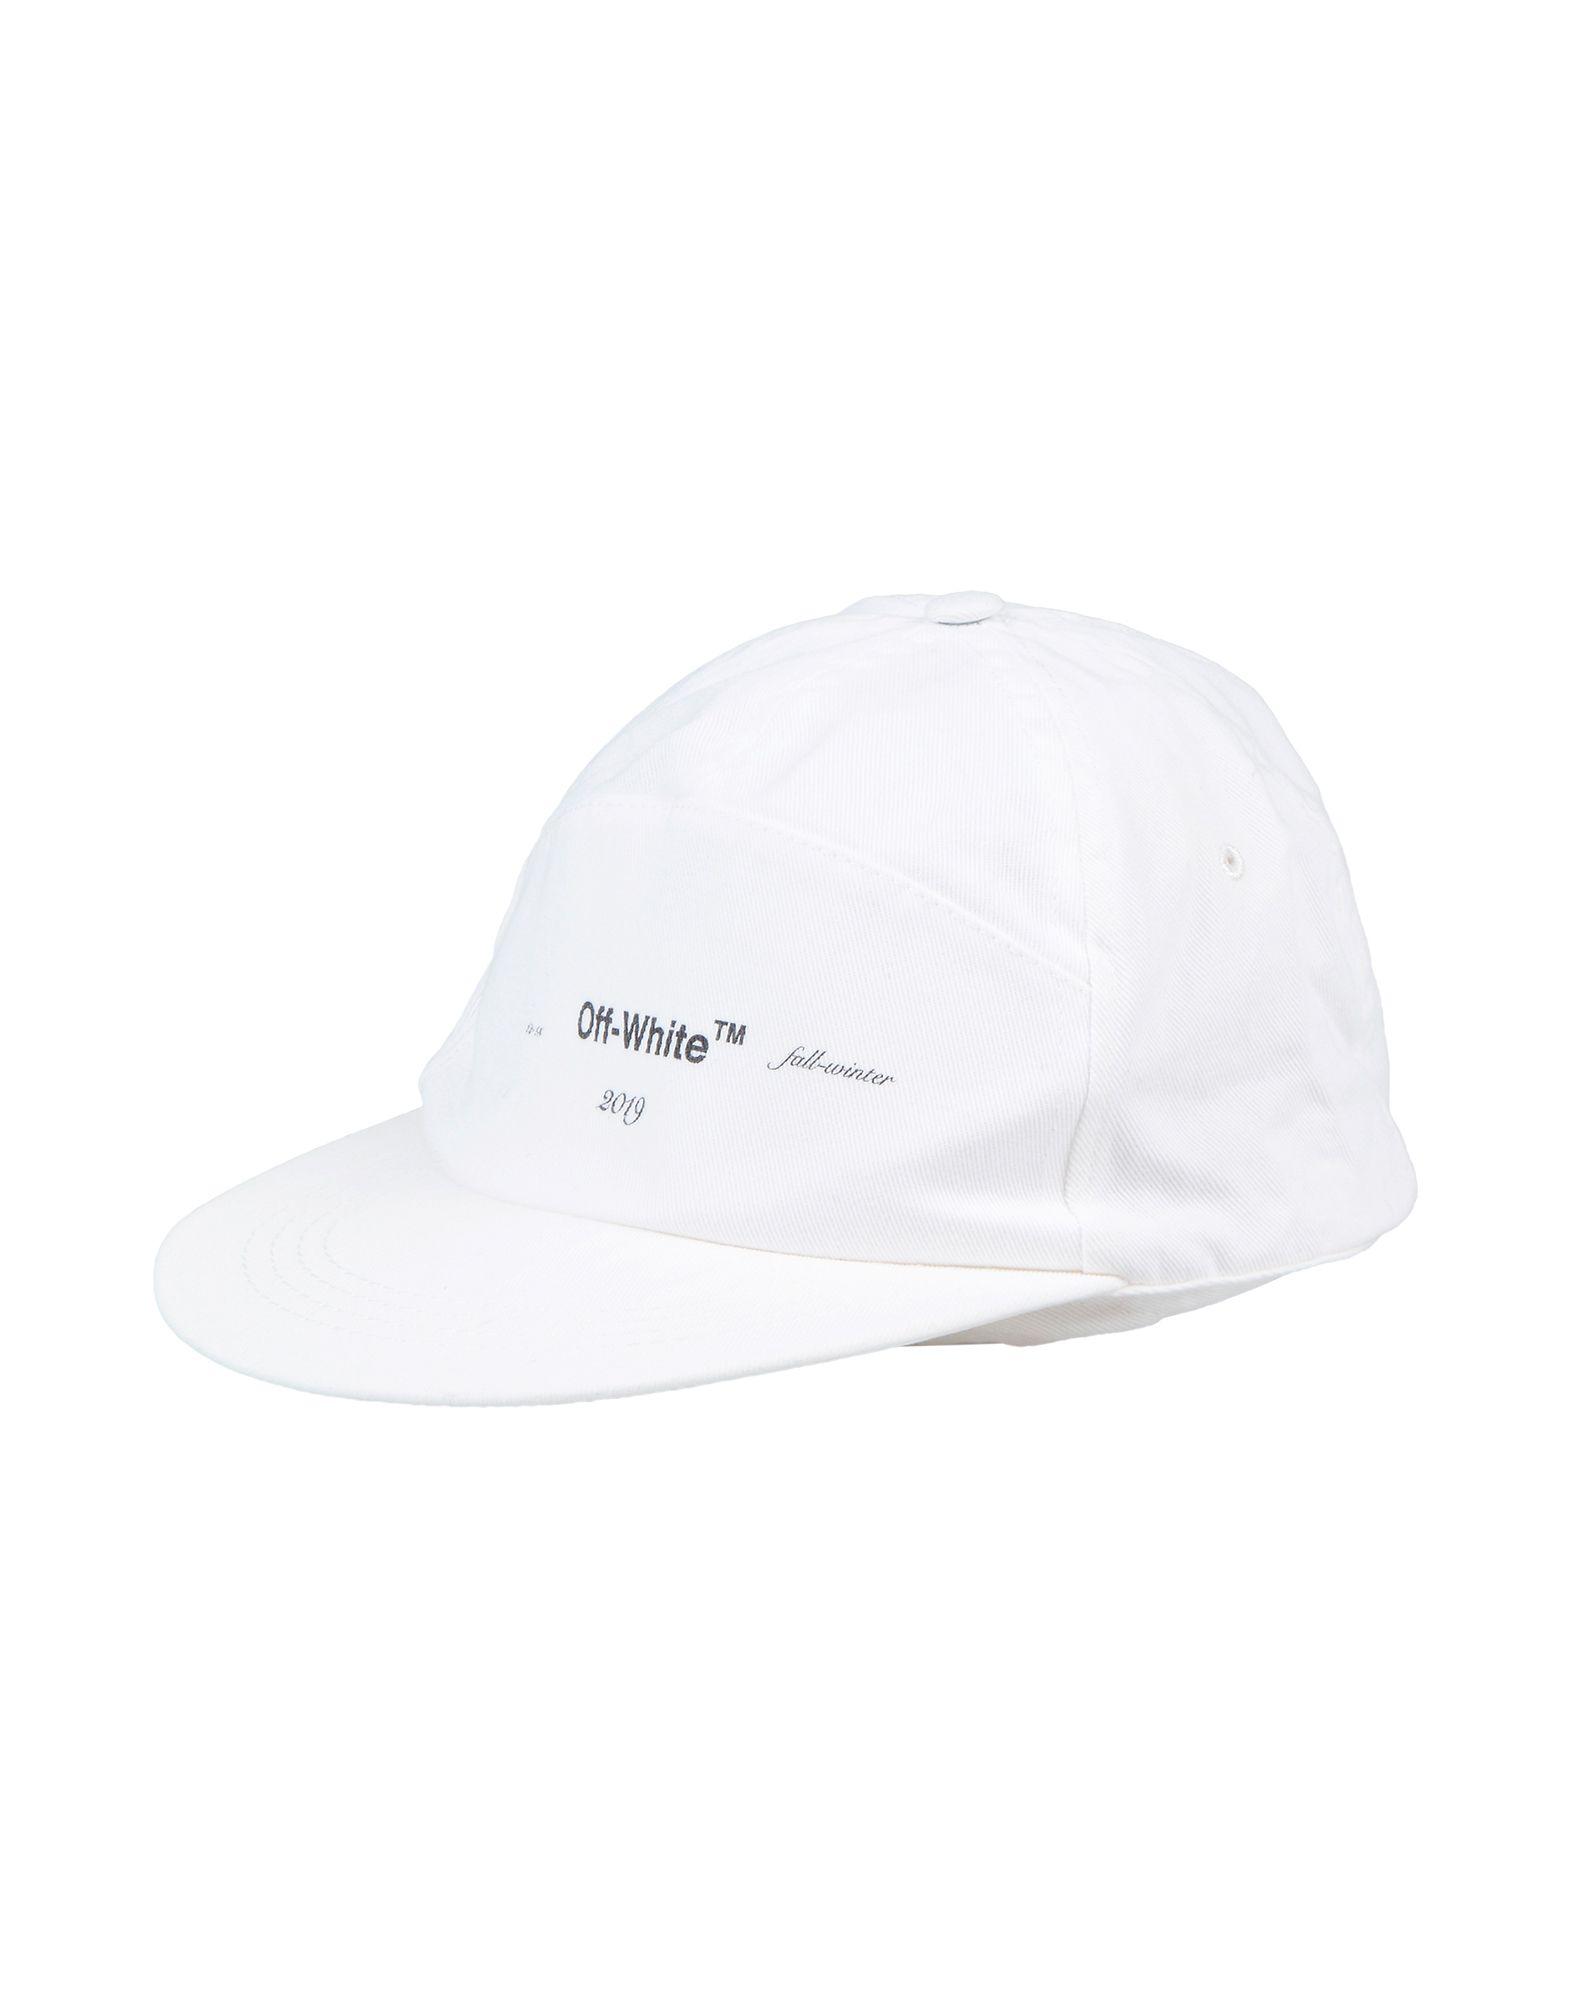 Off-White c/o Virgil Abloh Cotton Hat in White for Men - Lyst